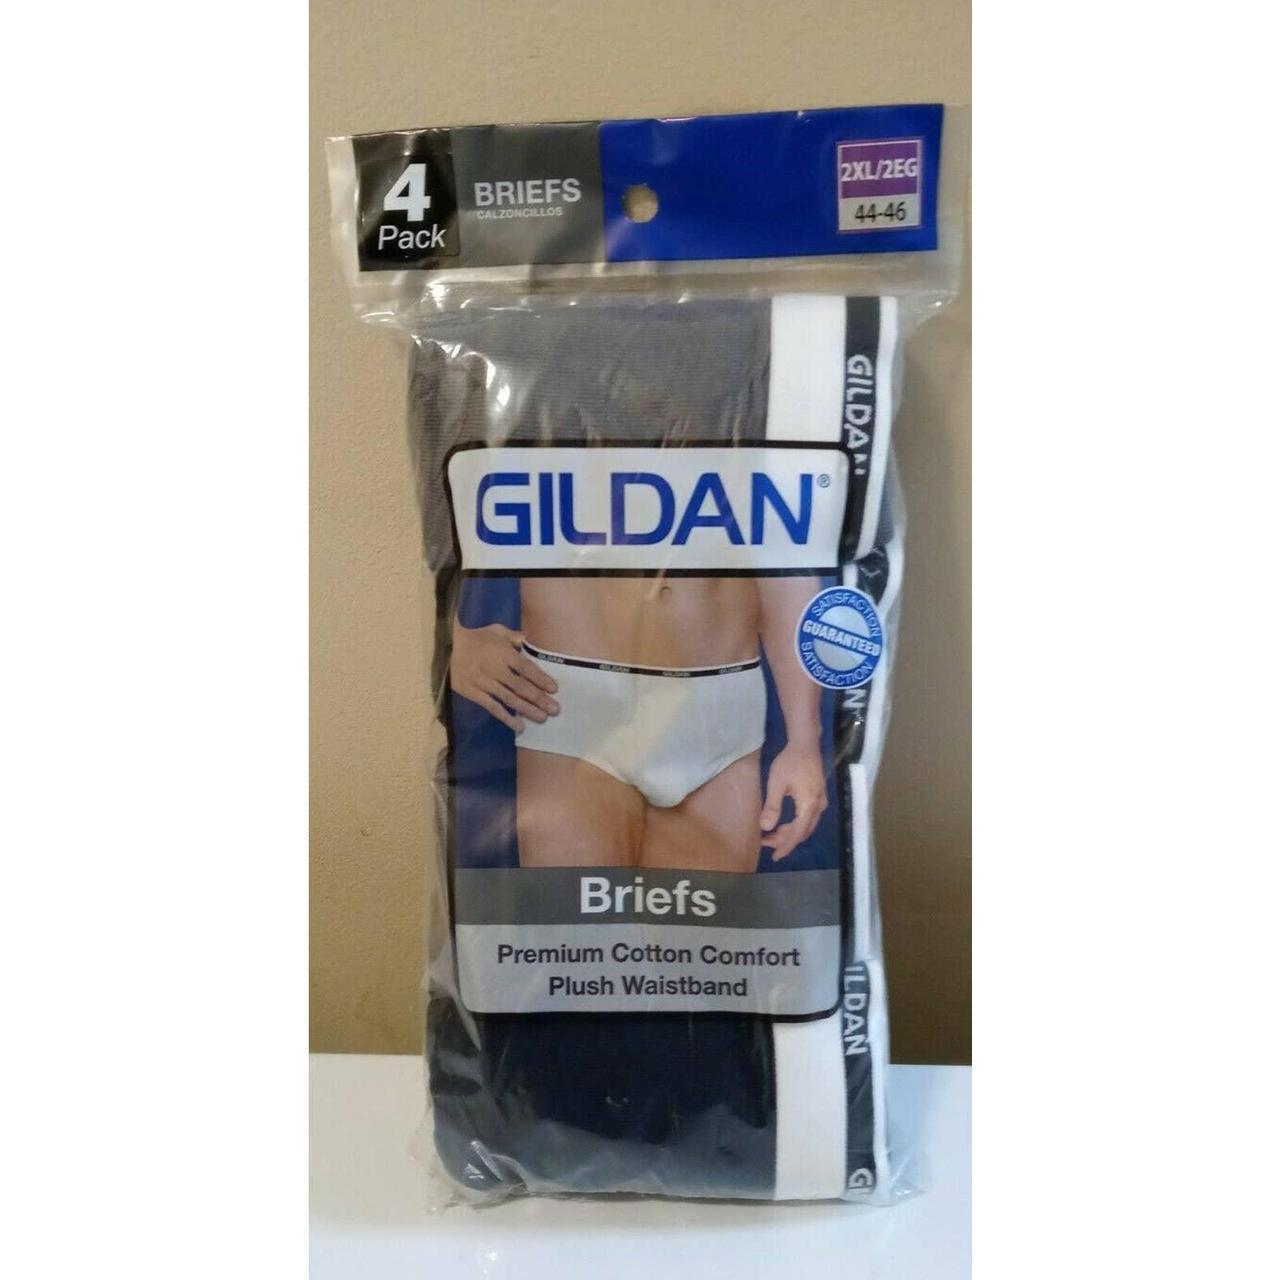 4-Pack Gildan Men's Premium Comfort Briefs, Plush - Depop